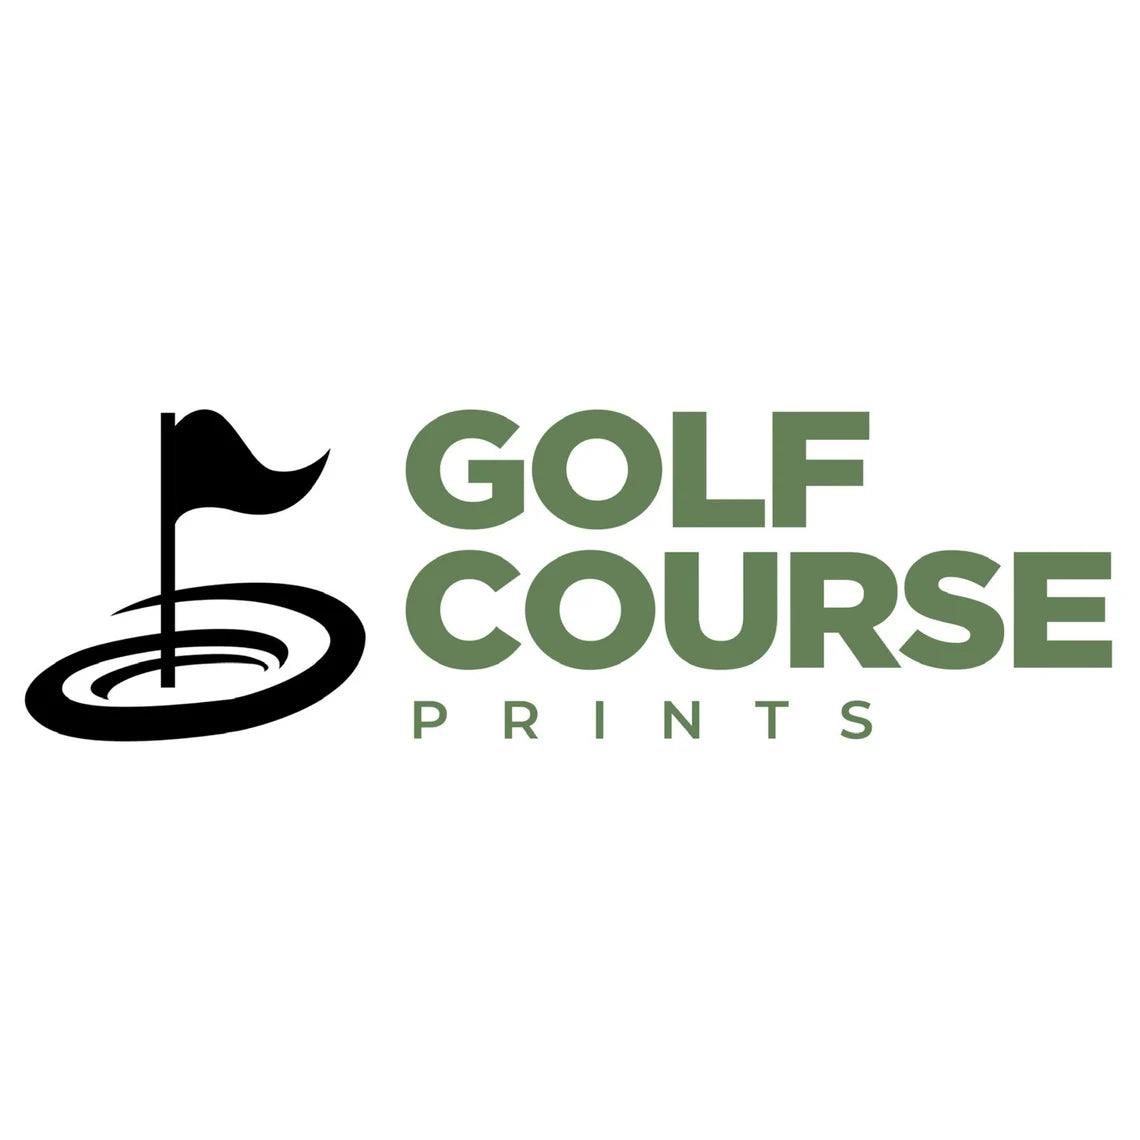 Pinehurst Resort No. 2 Country Club, North Carolina - Printed Golf Courses